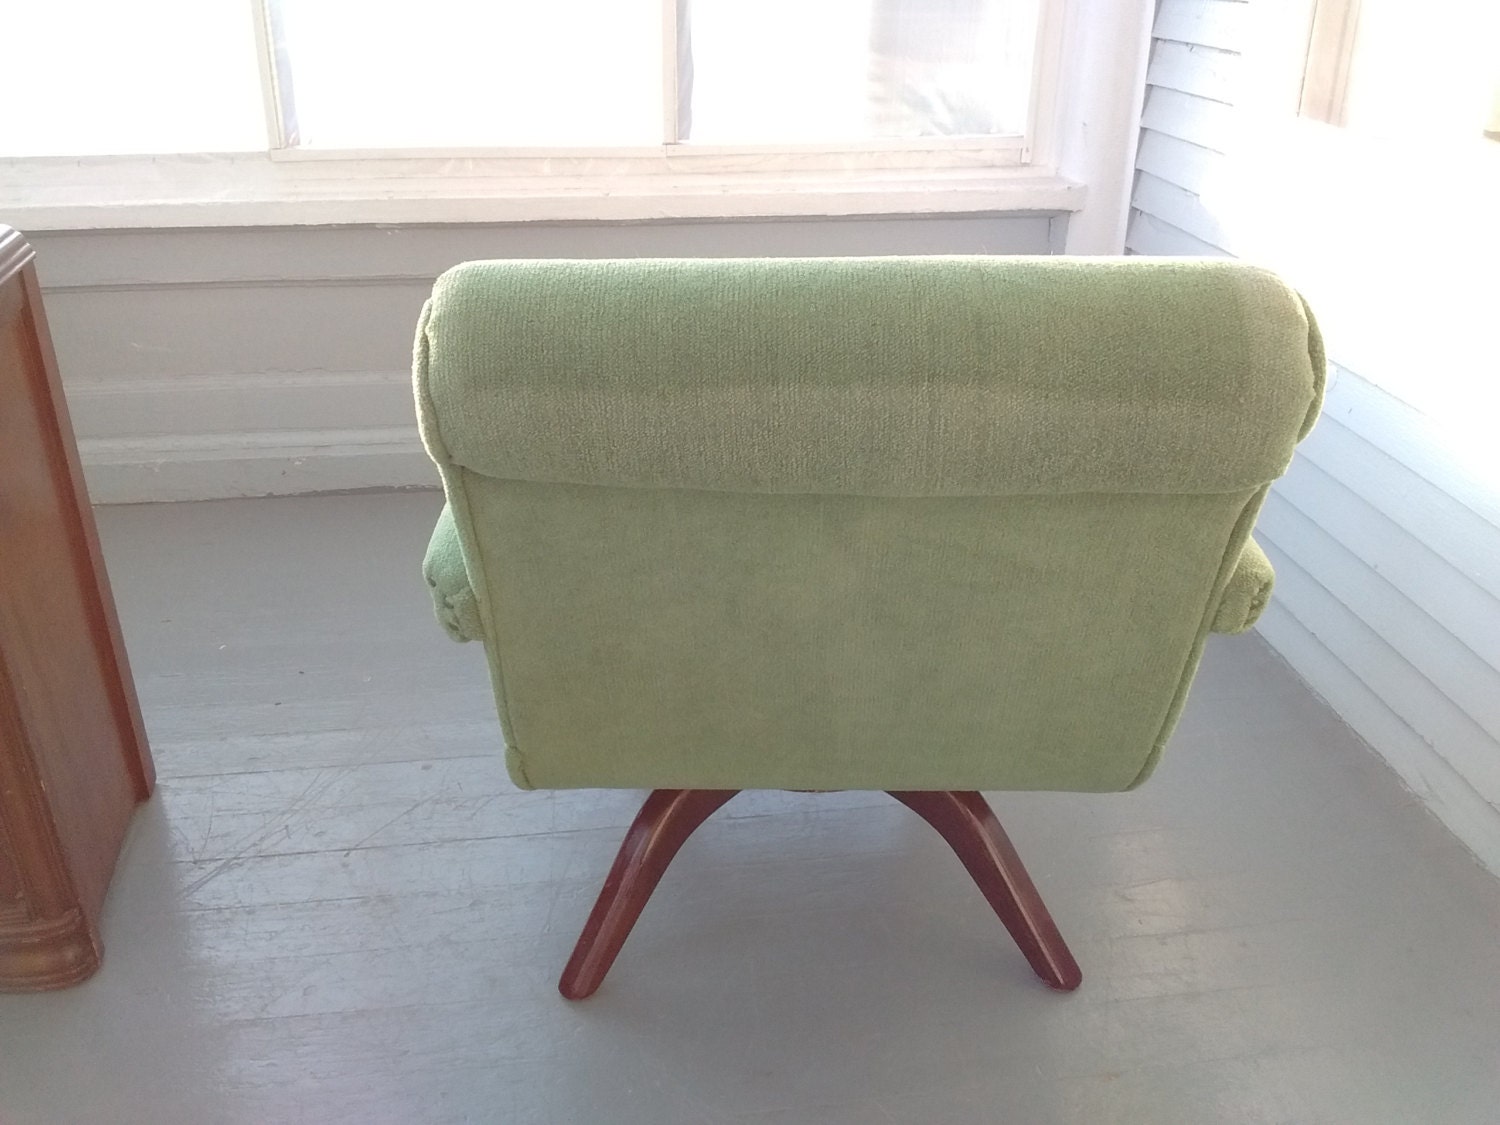 green rocking chair nursery